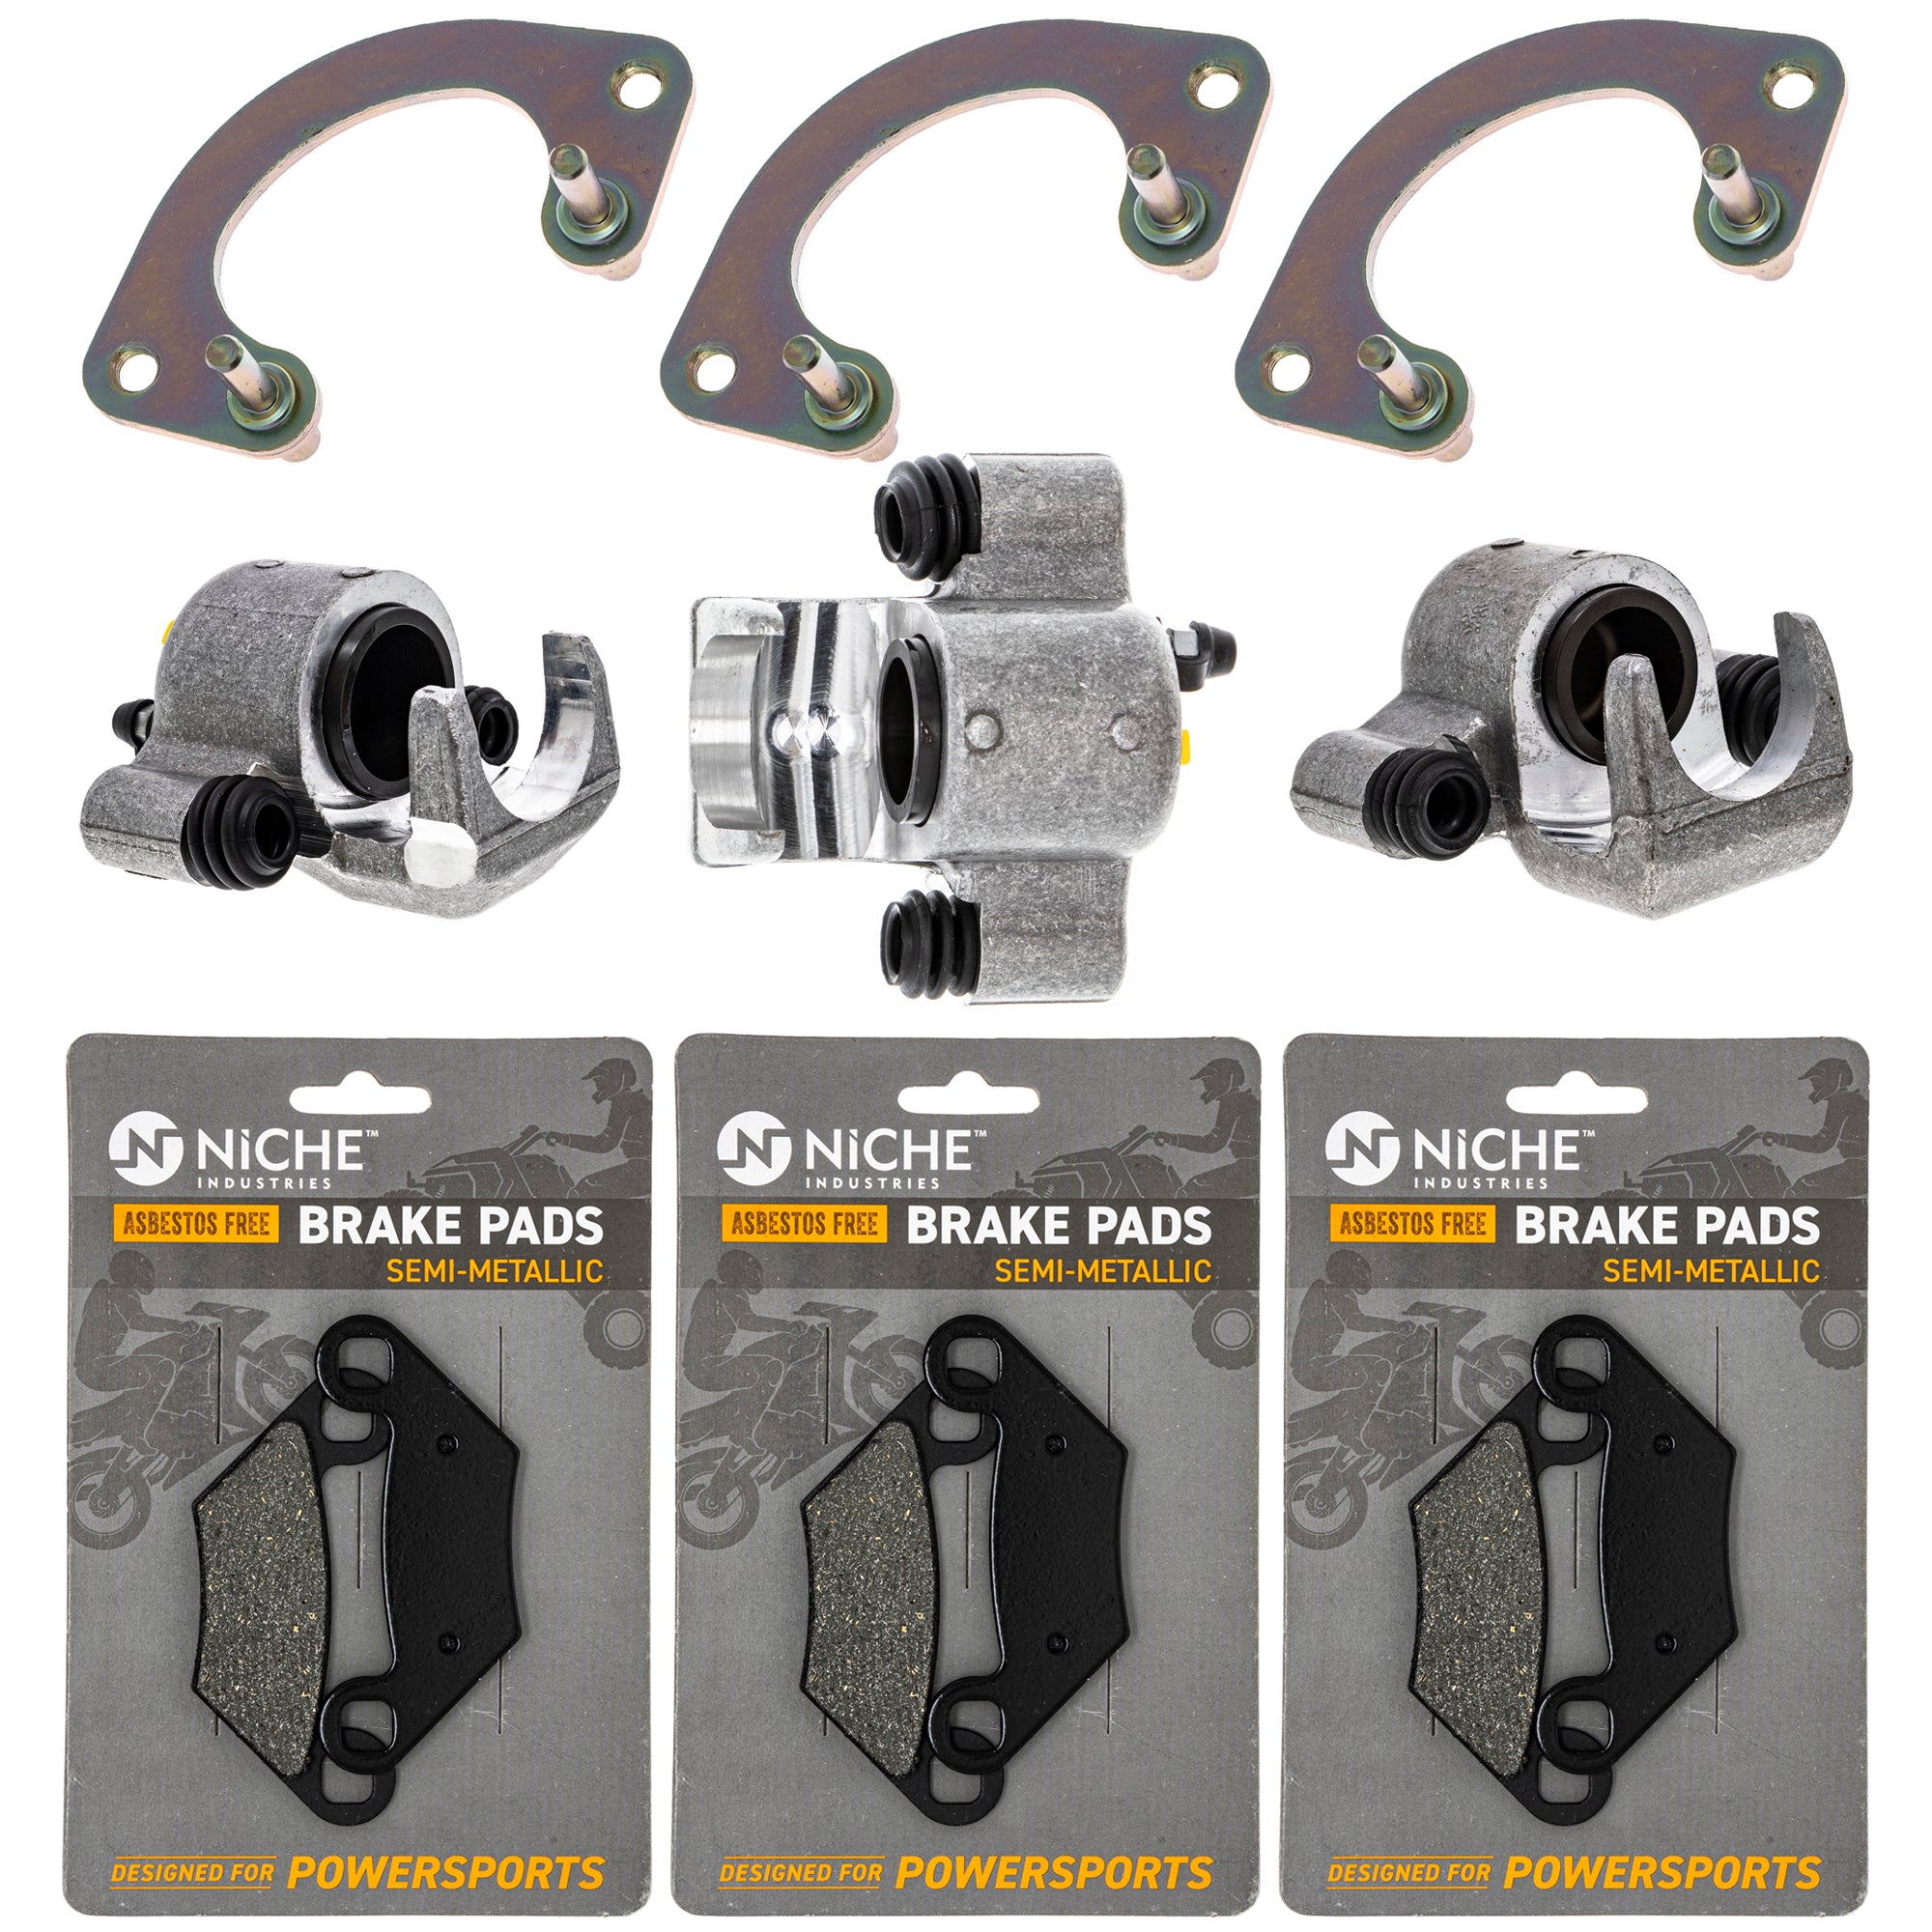 Brake Rebuild Kit Calipers & Pads (3) for zOTHER Polaris GEM Sportsman Scrambler NICHE MK1008199